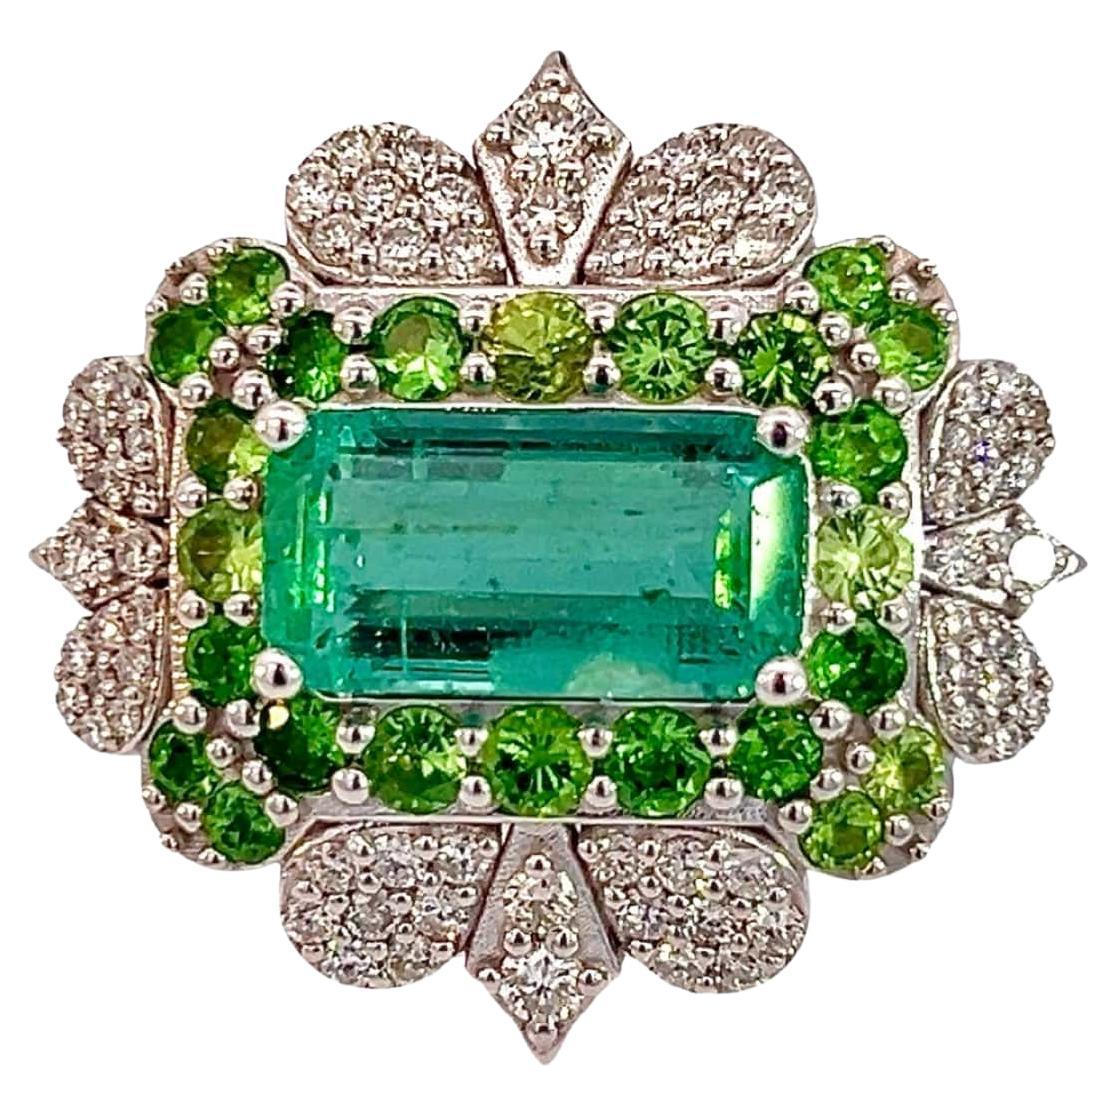 Natural Emerald Tsavorite Diamond Ring 6.75 14k White Gold 9.22 TCW Certified